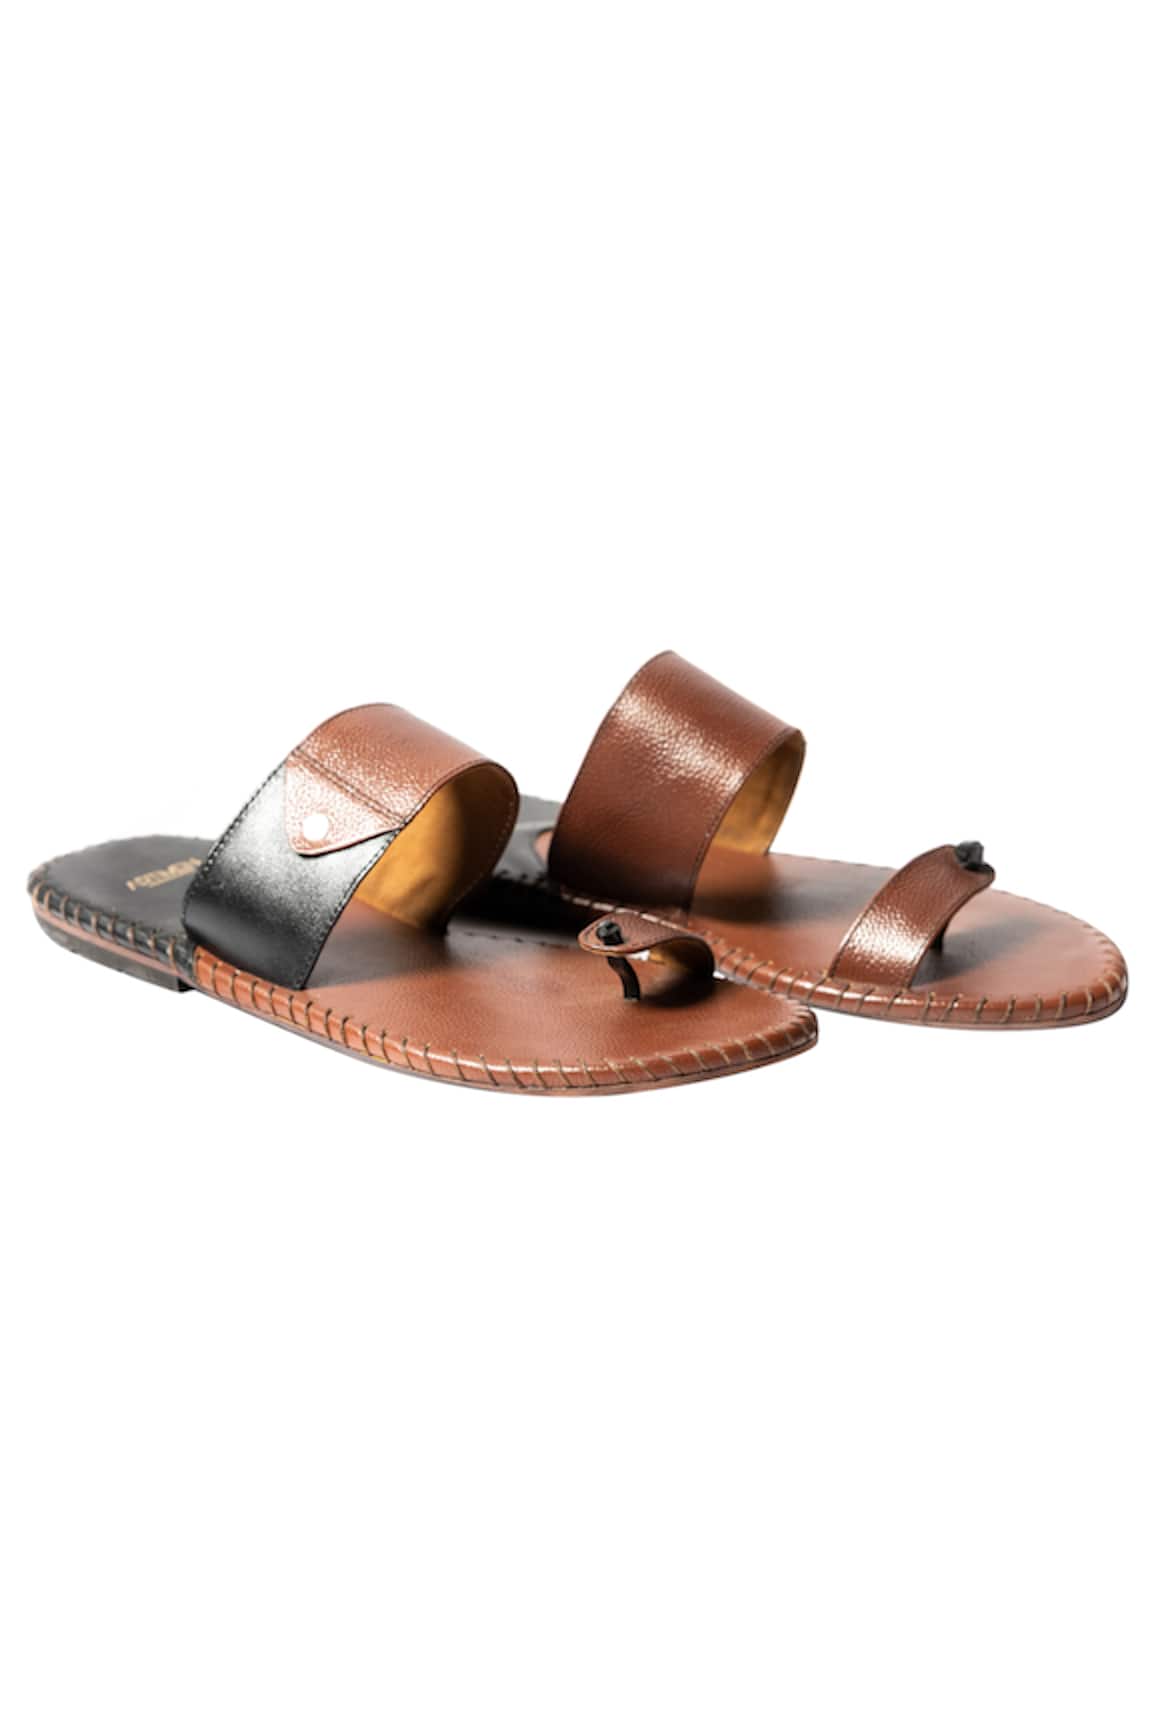 Artimen Handcrafted Leather Sandals